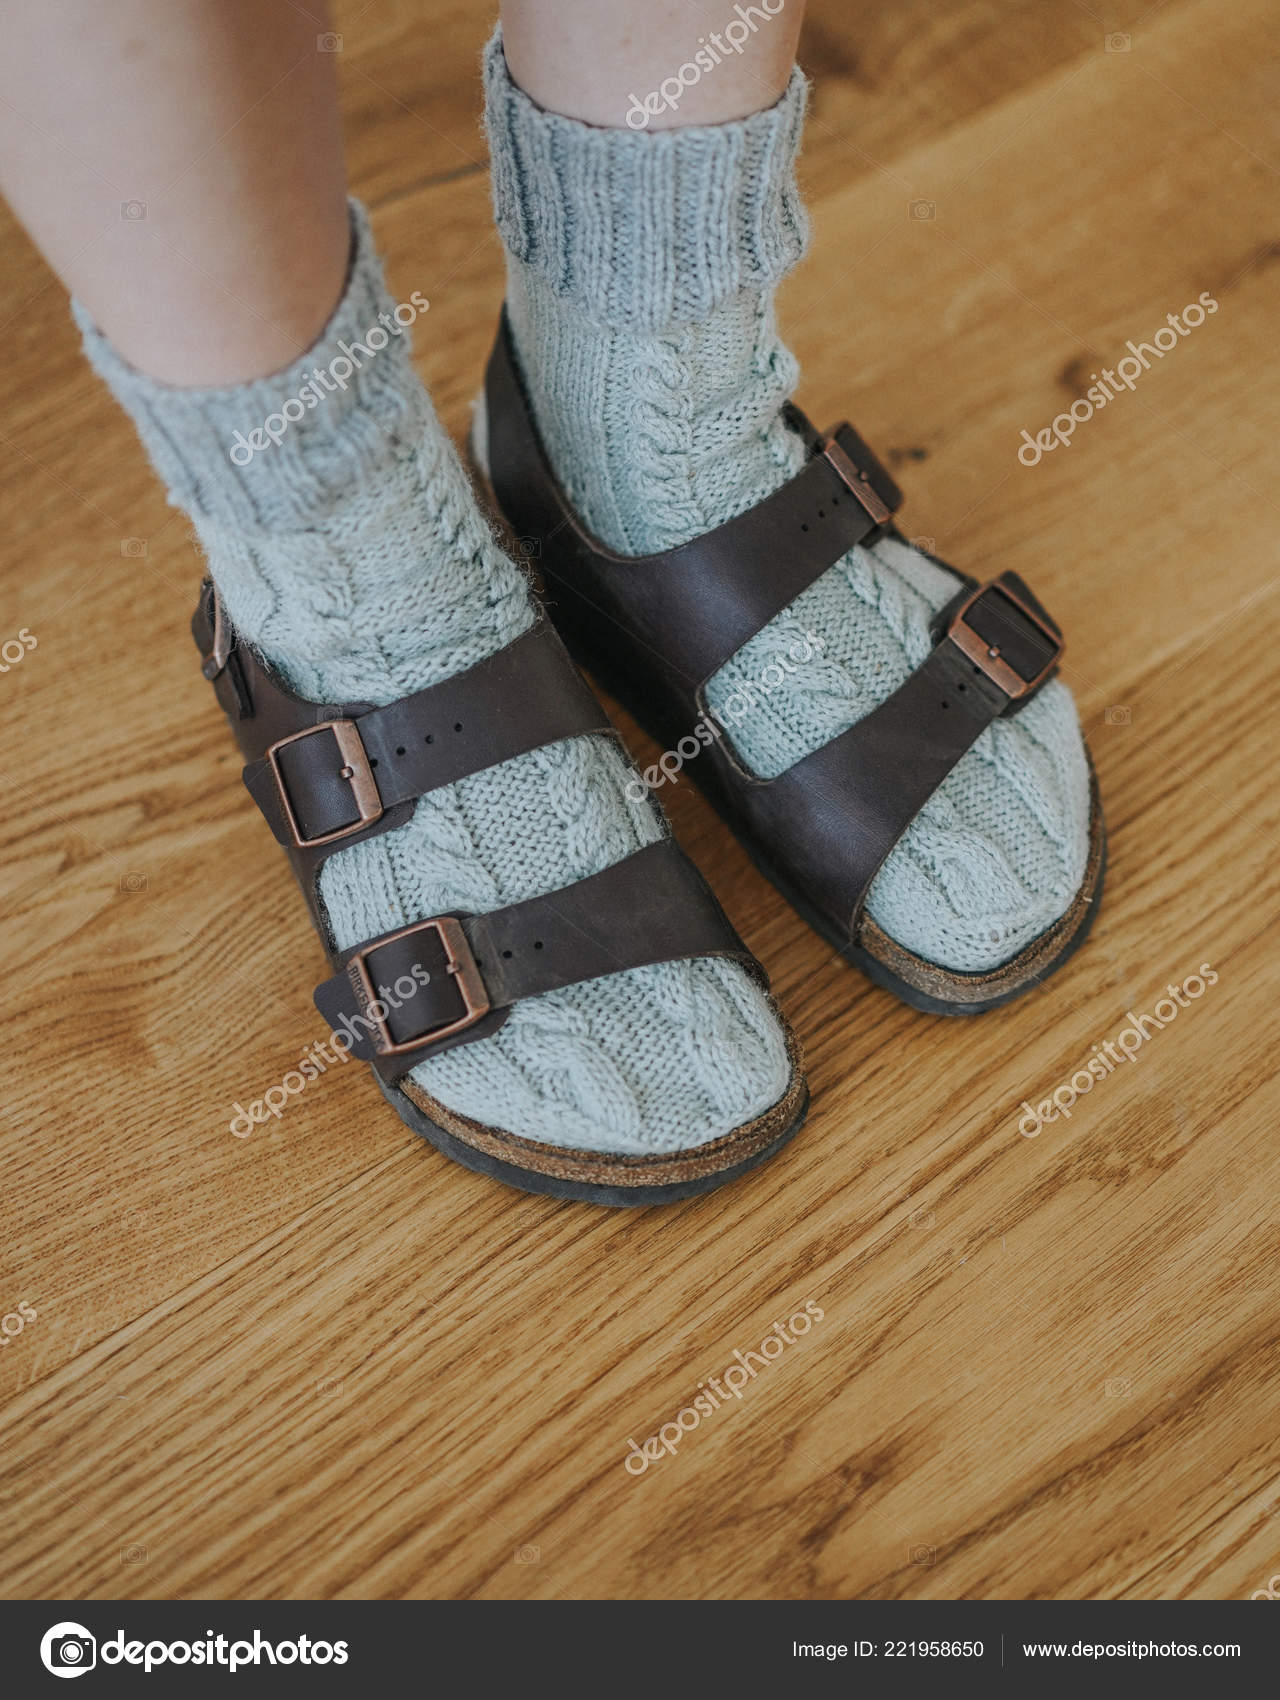 Granny style sock